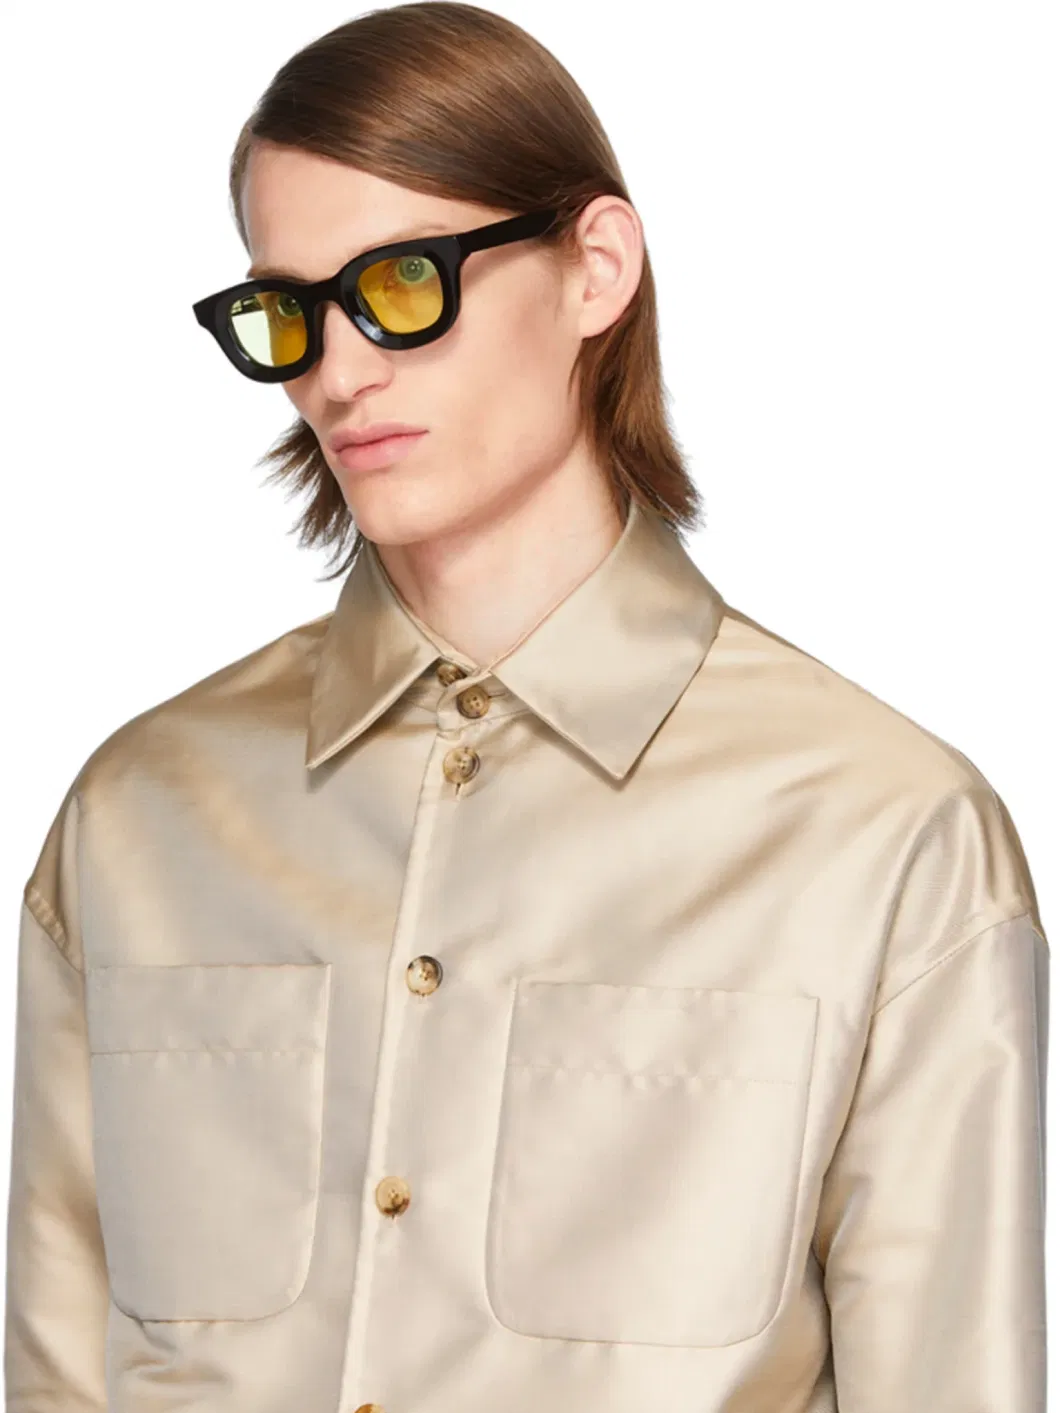 2023 Exclusive Designer Style Thick Acetate Cr39 Sunglasses Round Fashion Popular Sunglasses Designer Top Sunglasses